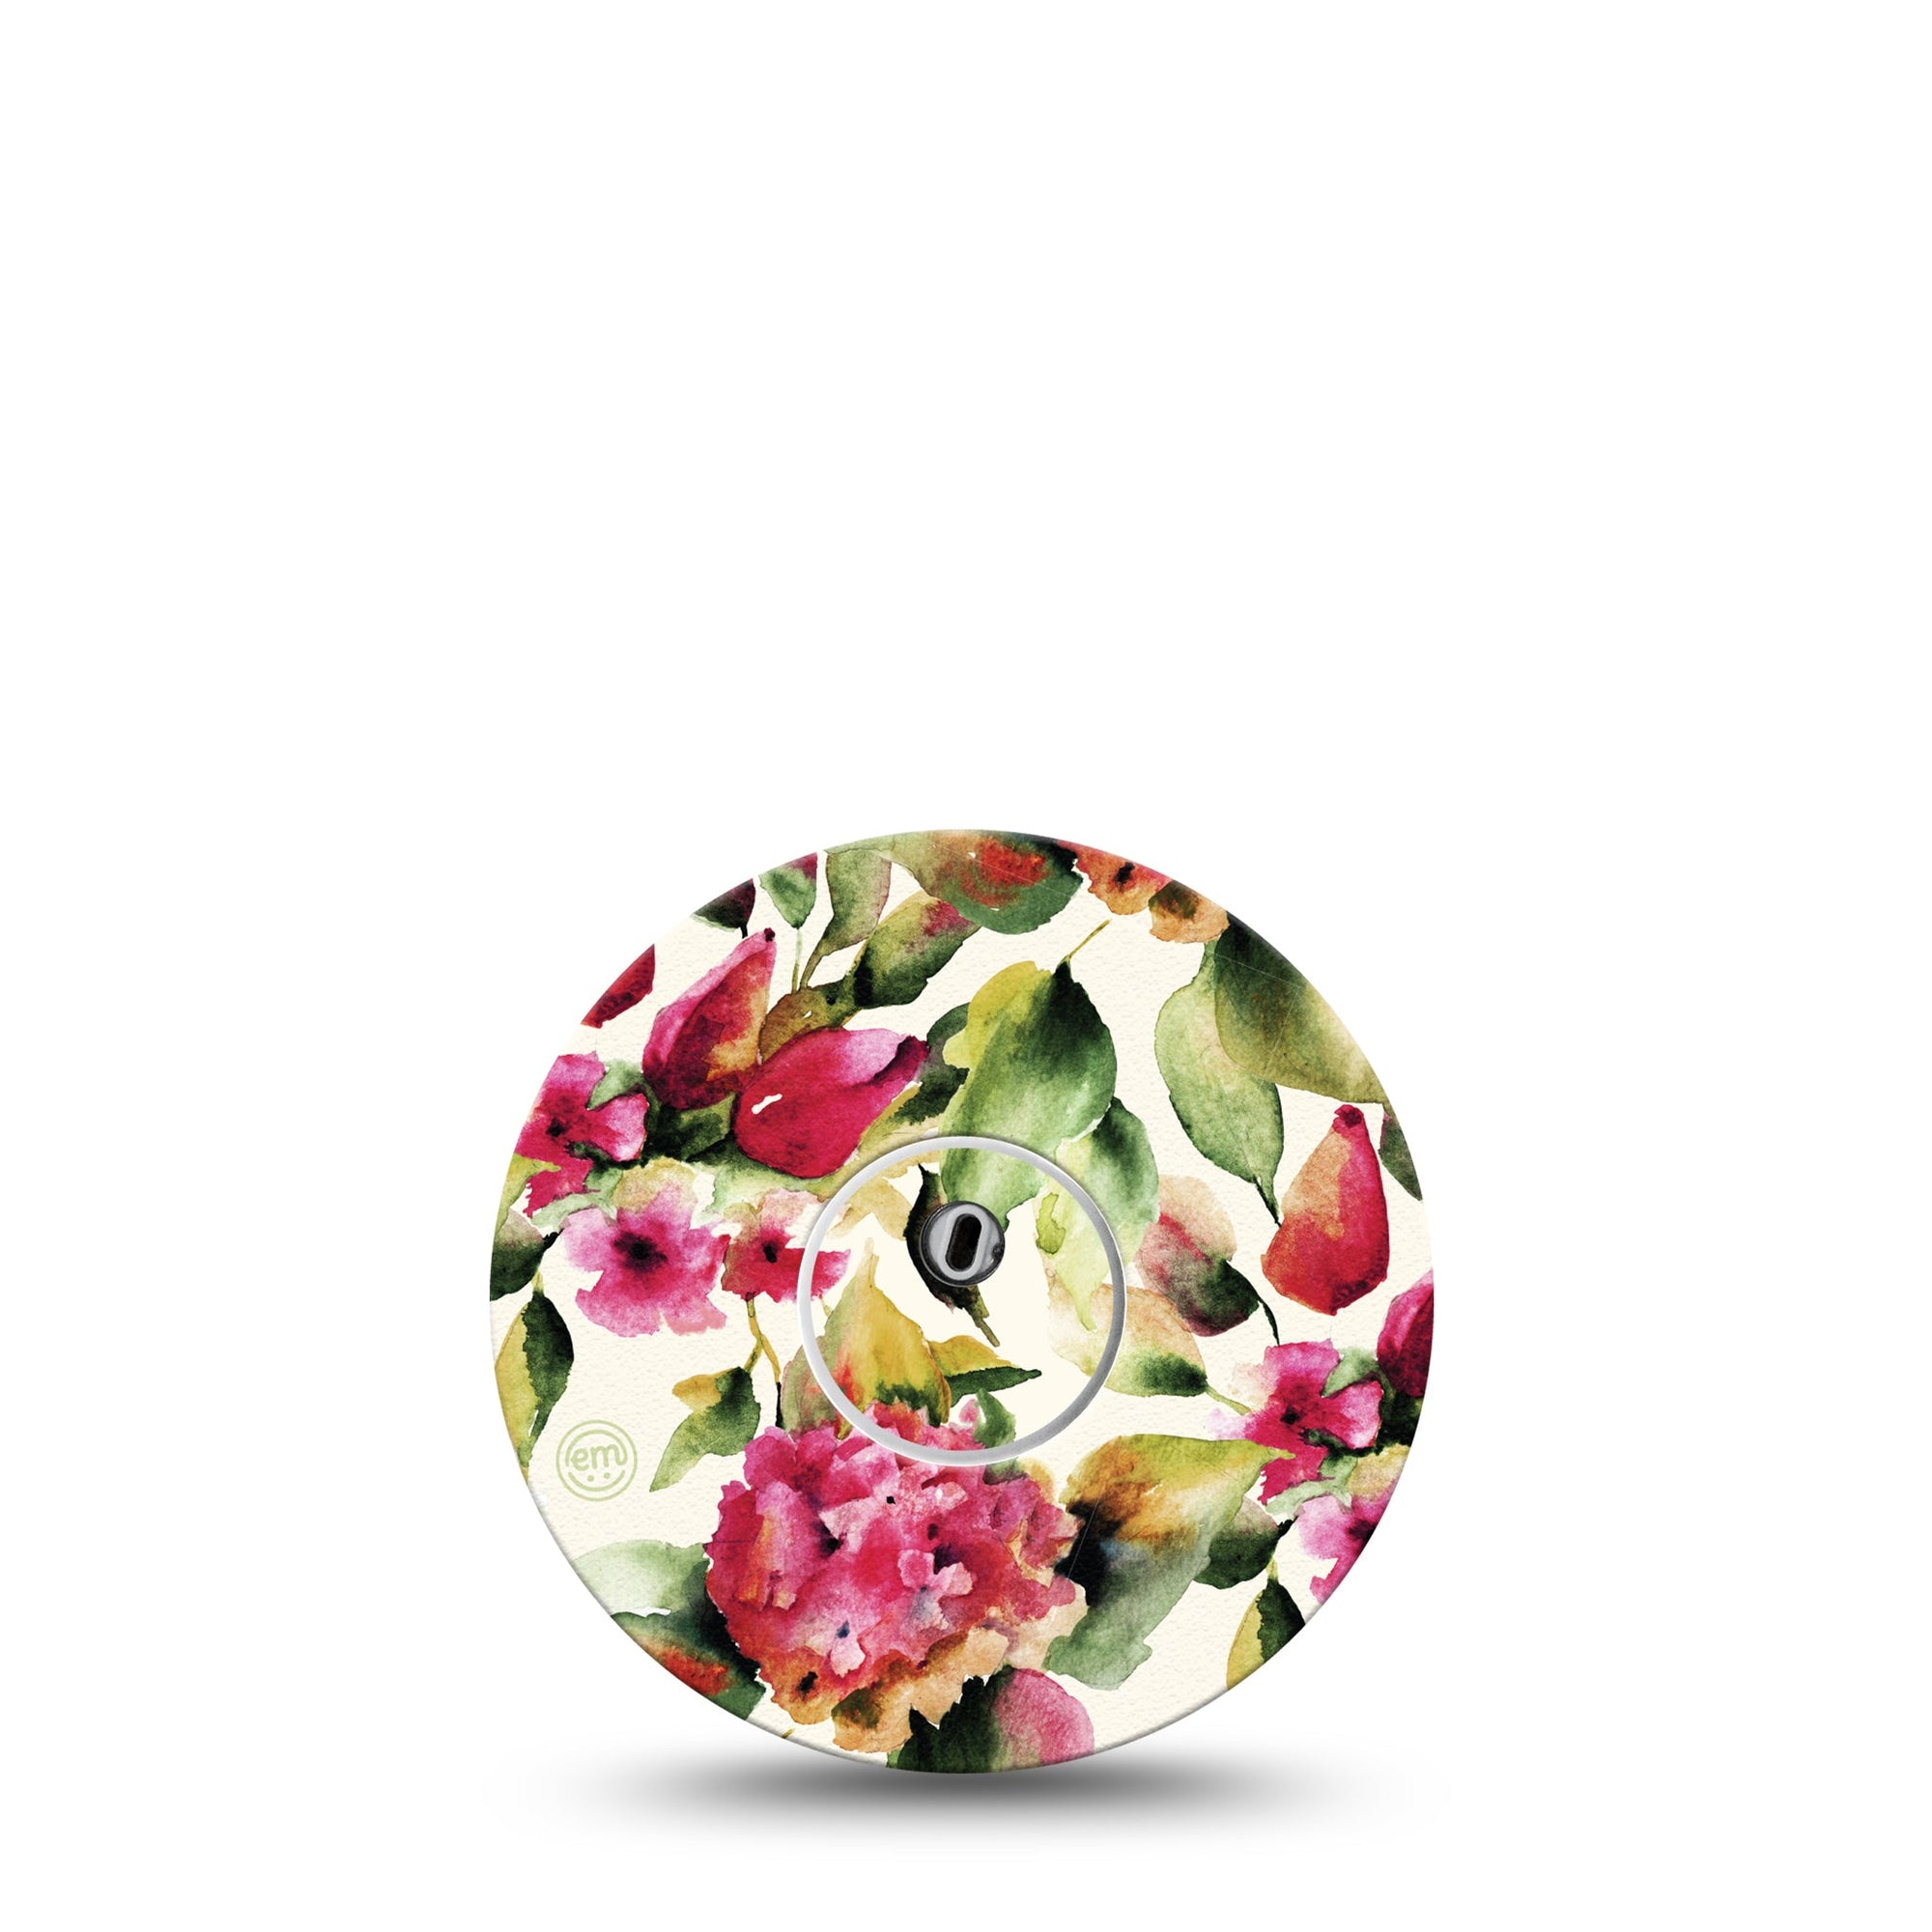 ExpressionMed Floral Romance Libre 3 Sticker, Autumn Florals CGM Vinyl Tape and Sticker Design